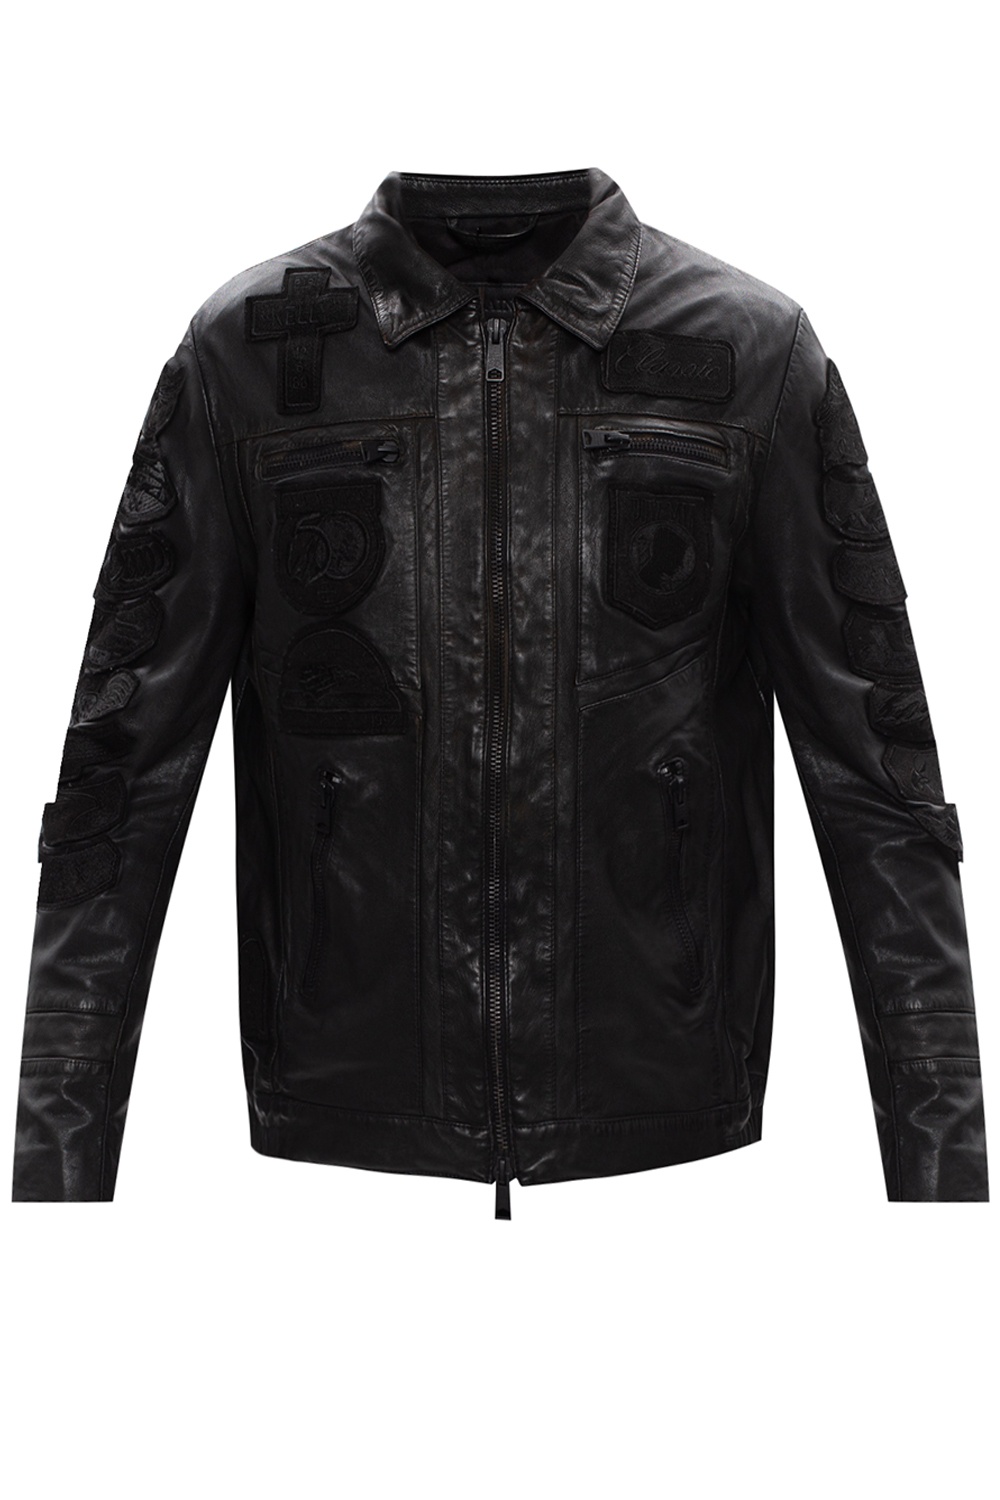 AllSaints ‘Harley’ leather jacket